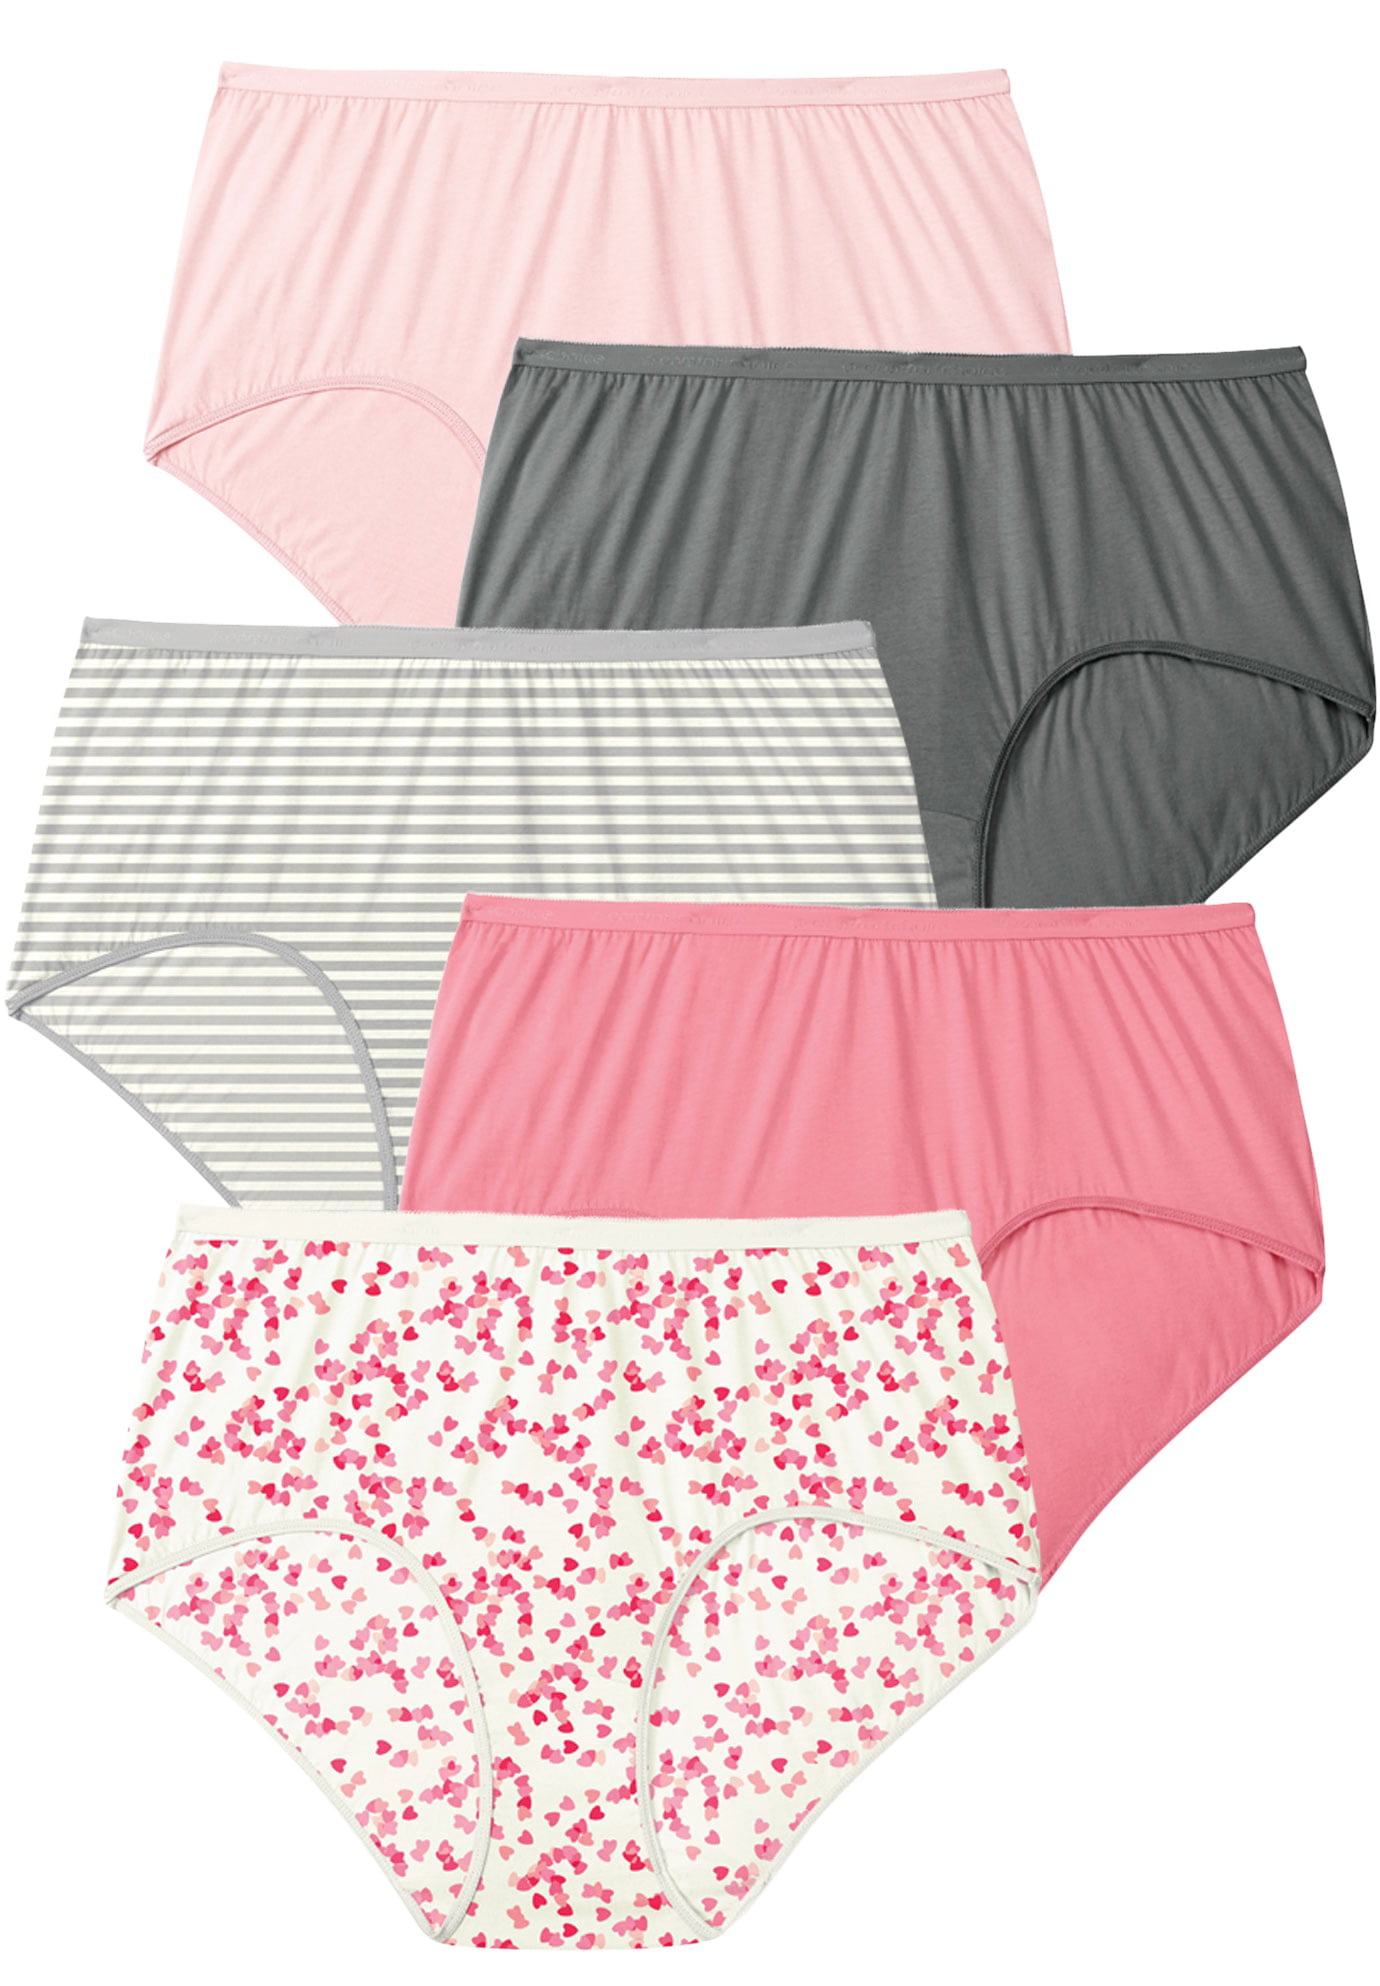 10 Just My Size Cool Comfort™ High-Waist Women's Cotton Brief Panties 1615C5